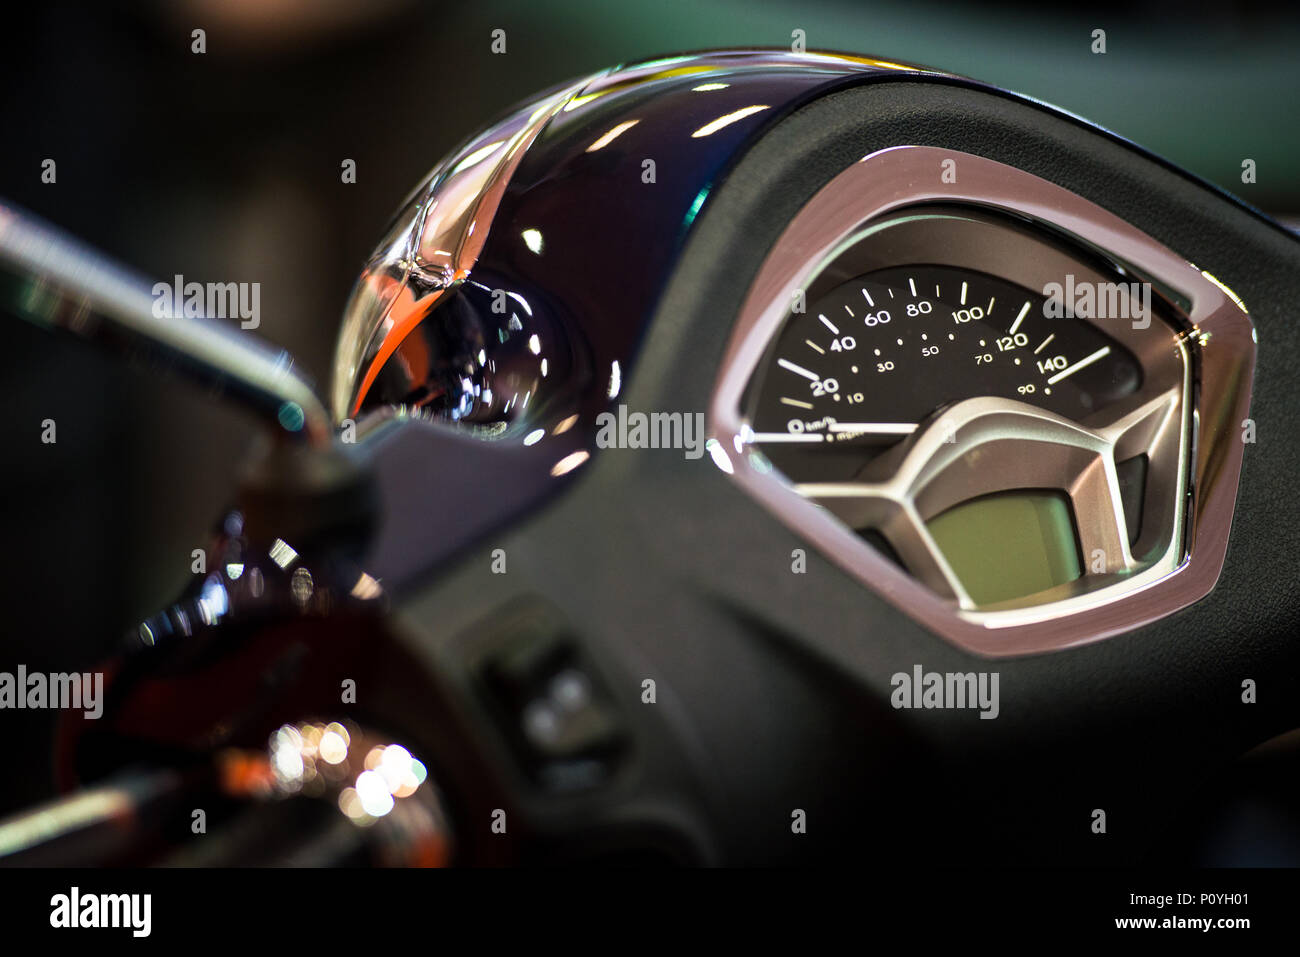 Motorrad tacho -Fotos und -Bildmaterial in hoher Auflösung – Alamy